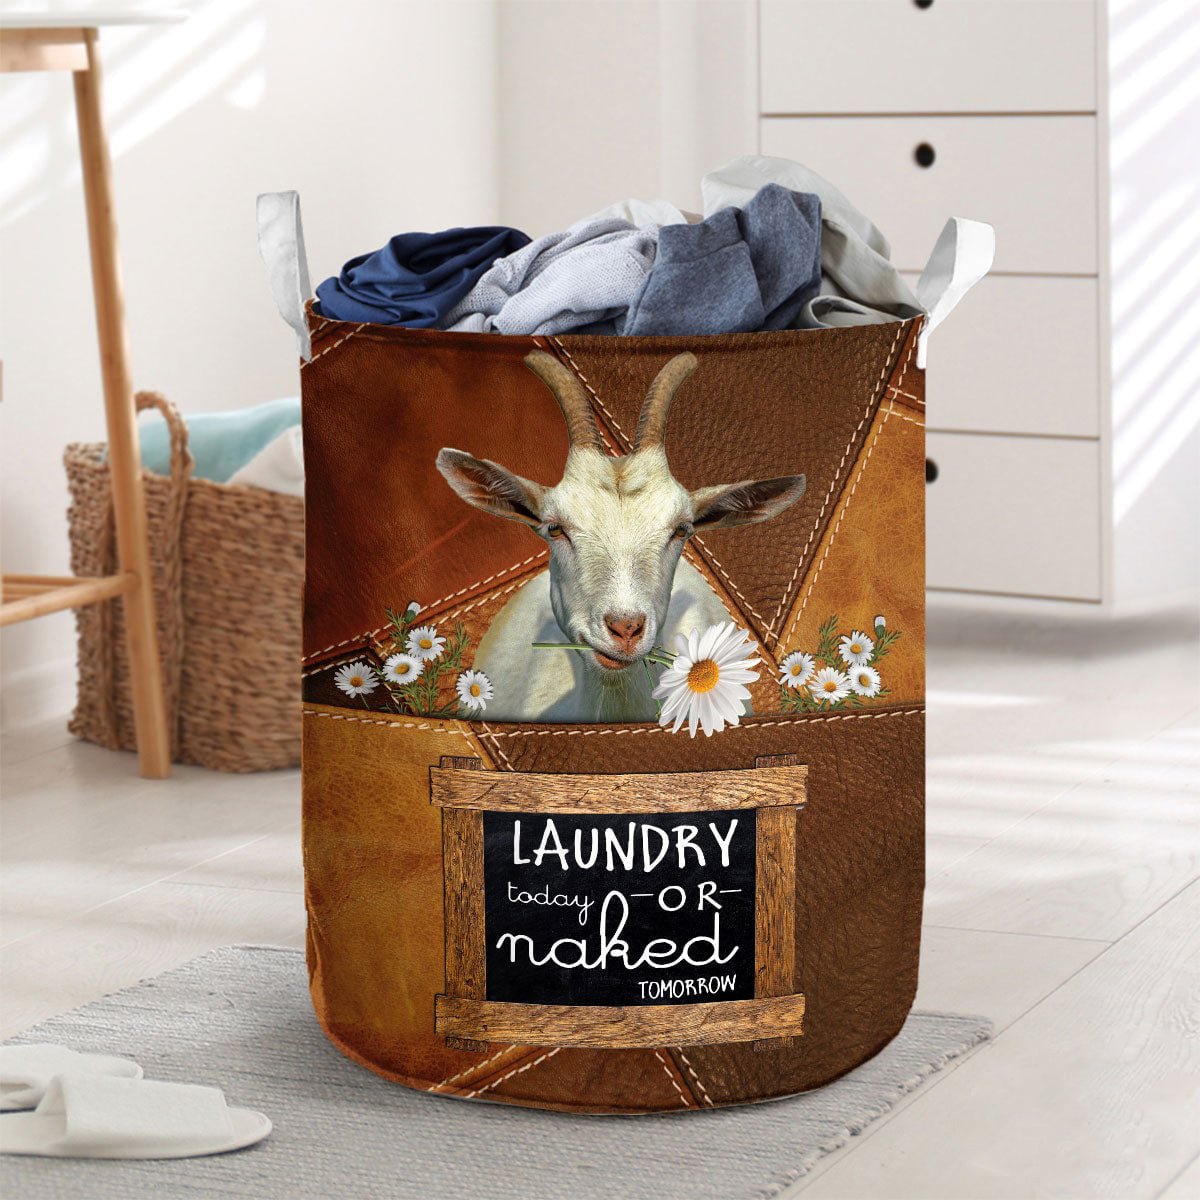 SAANEN-laundry today or naked tomorrow laundry basket